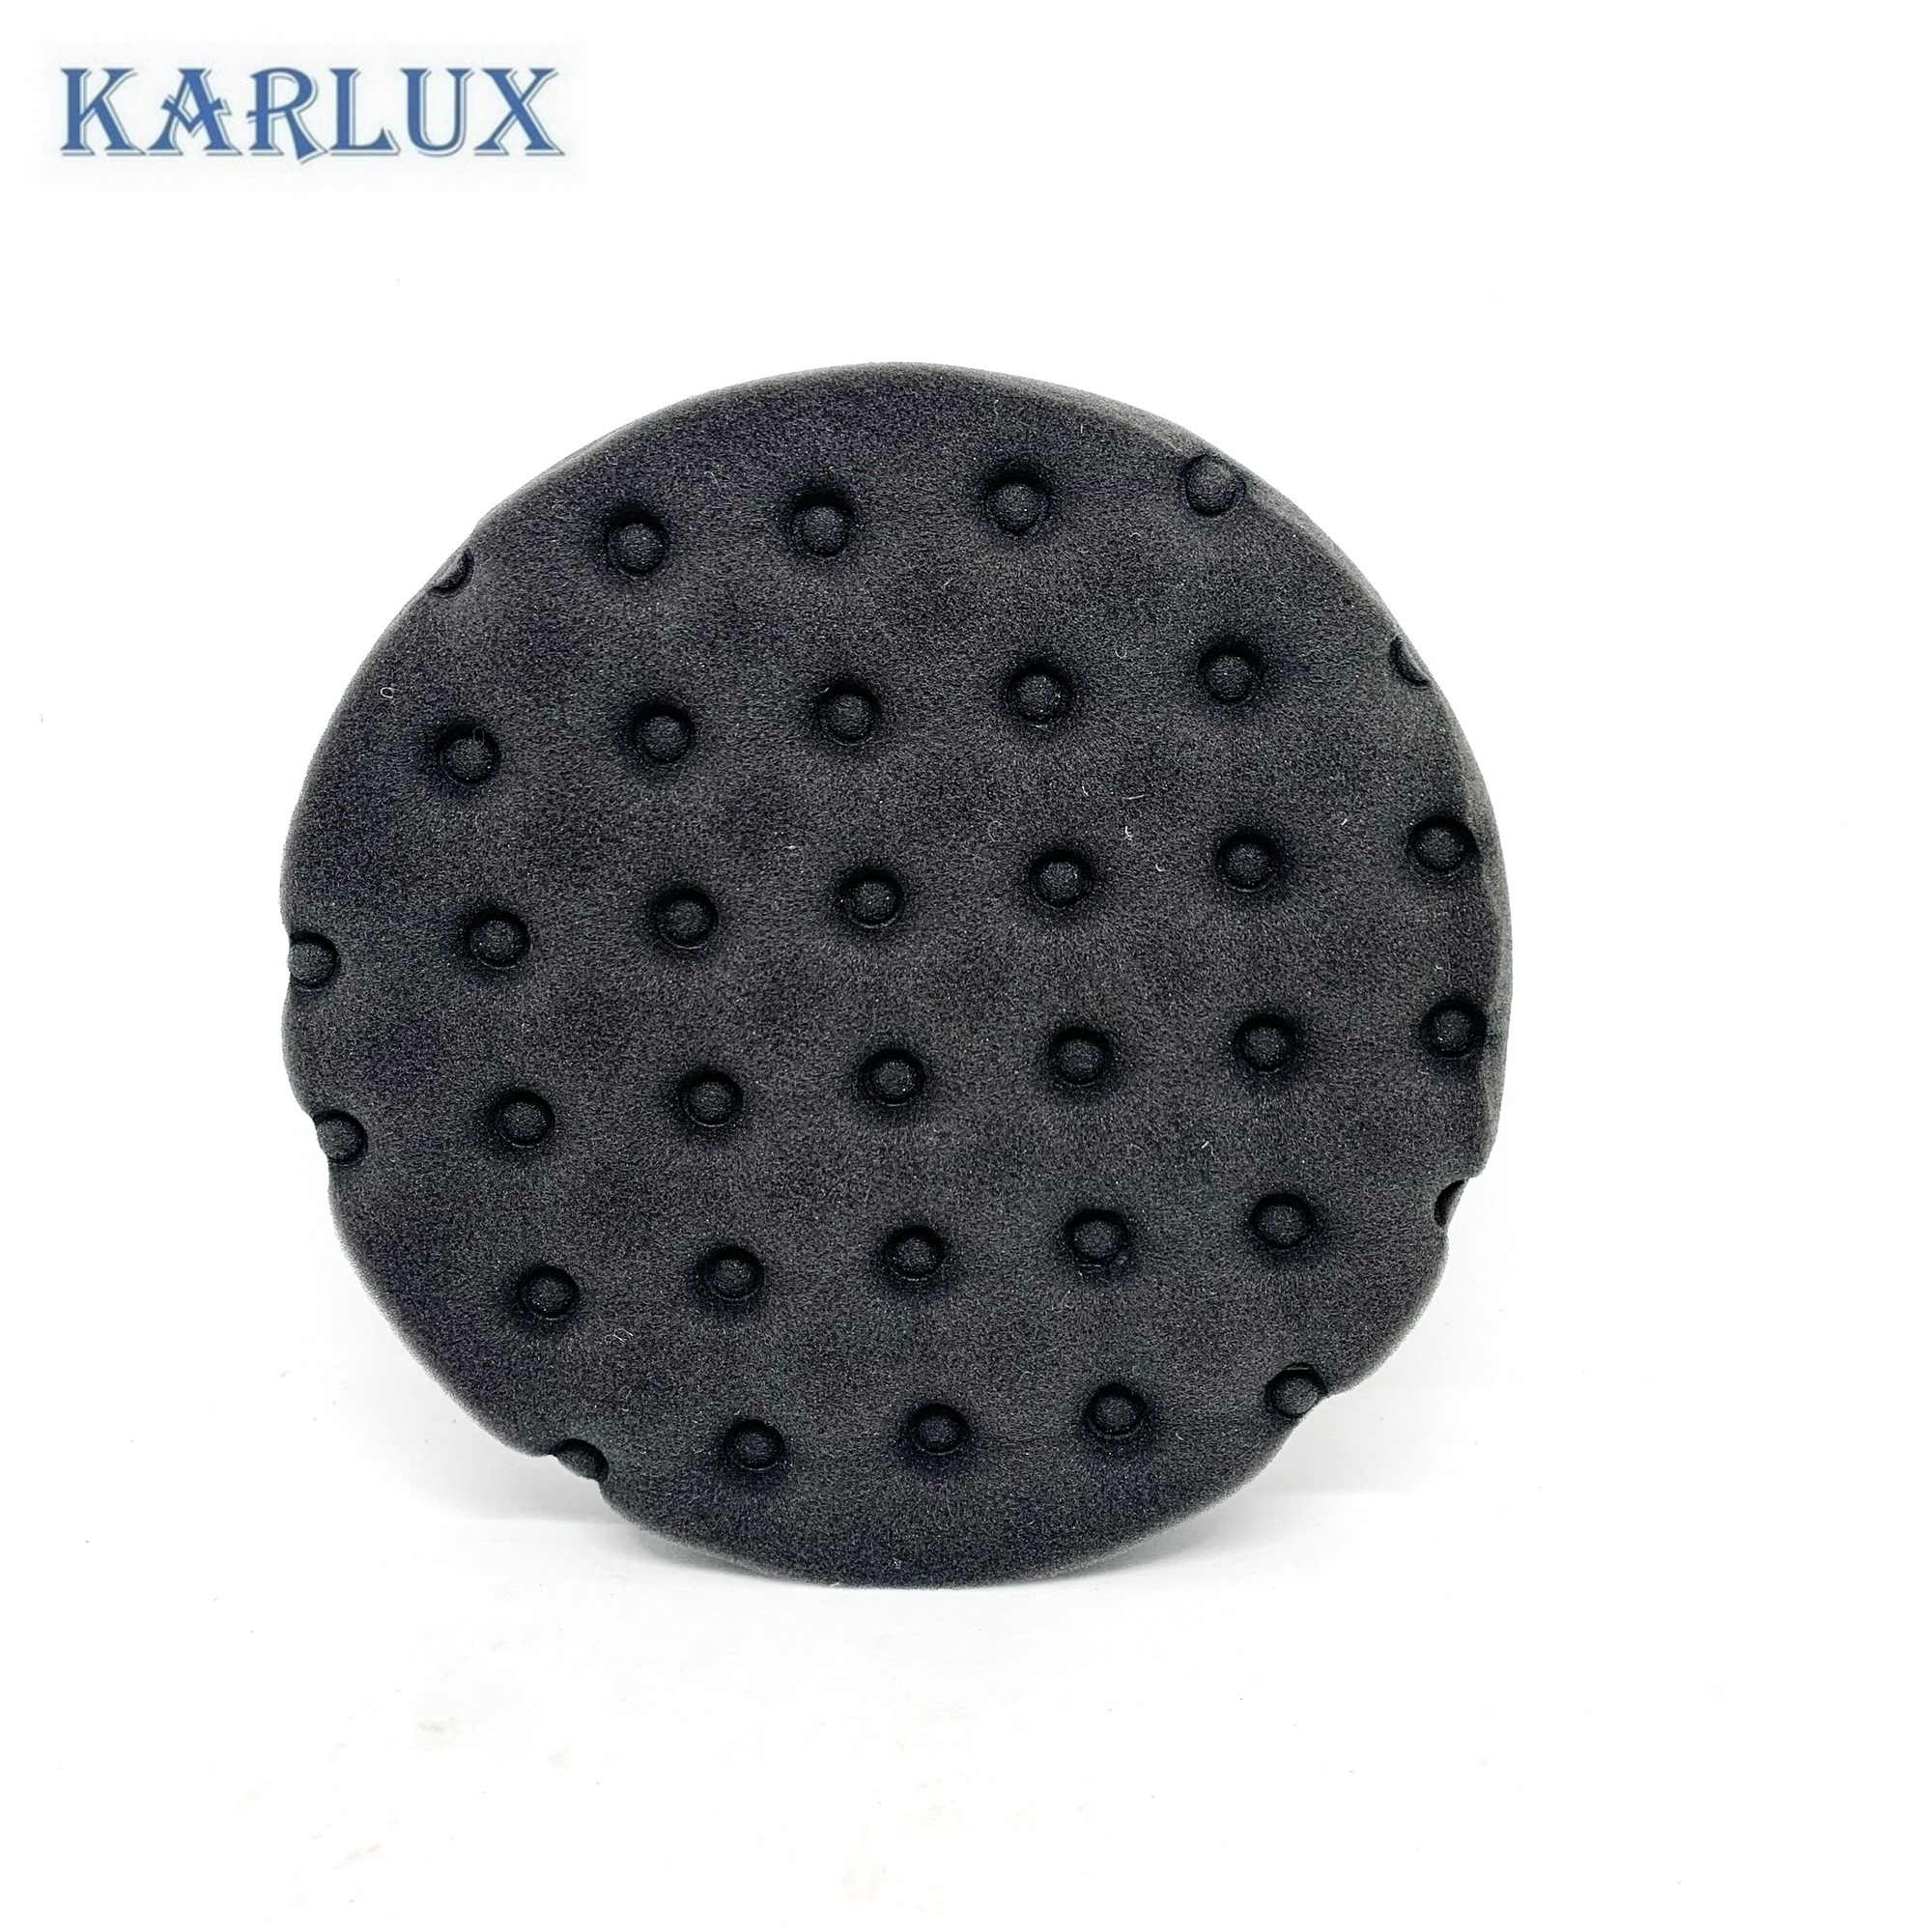 Karlux ฟองน้ำขัดสีรถ 6นิ้ว สีดำ Black Polish Dot Foam 6inch (สำหรับแป้นจับ 5นิ้ว เพื่อเว้นขอบ)